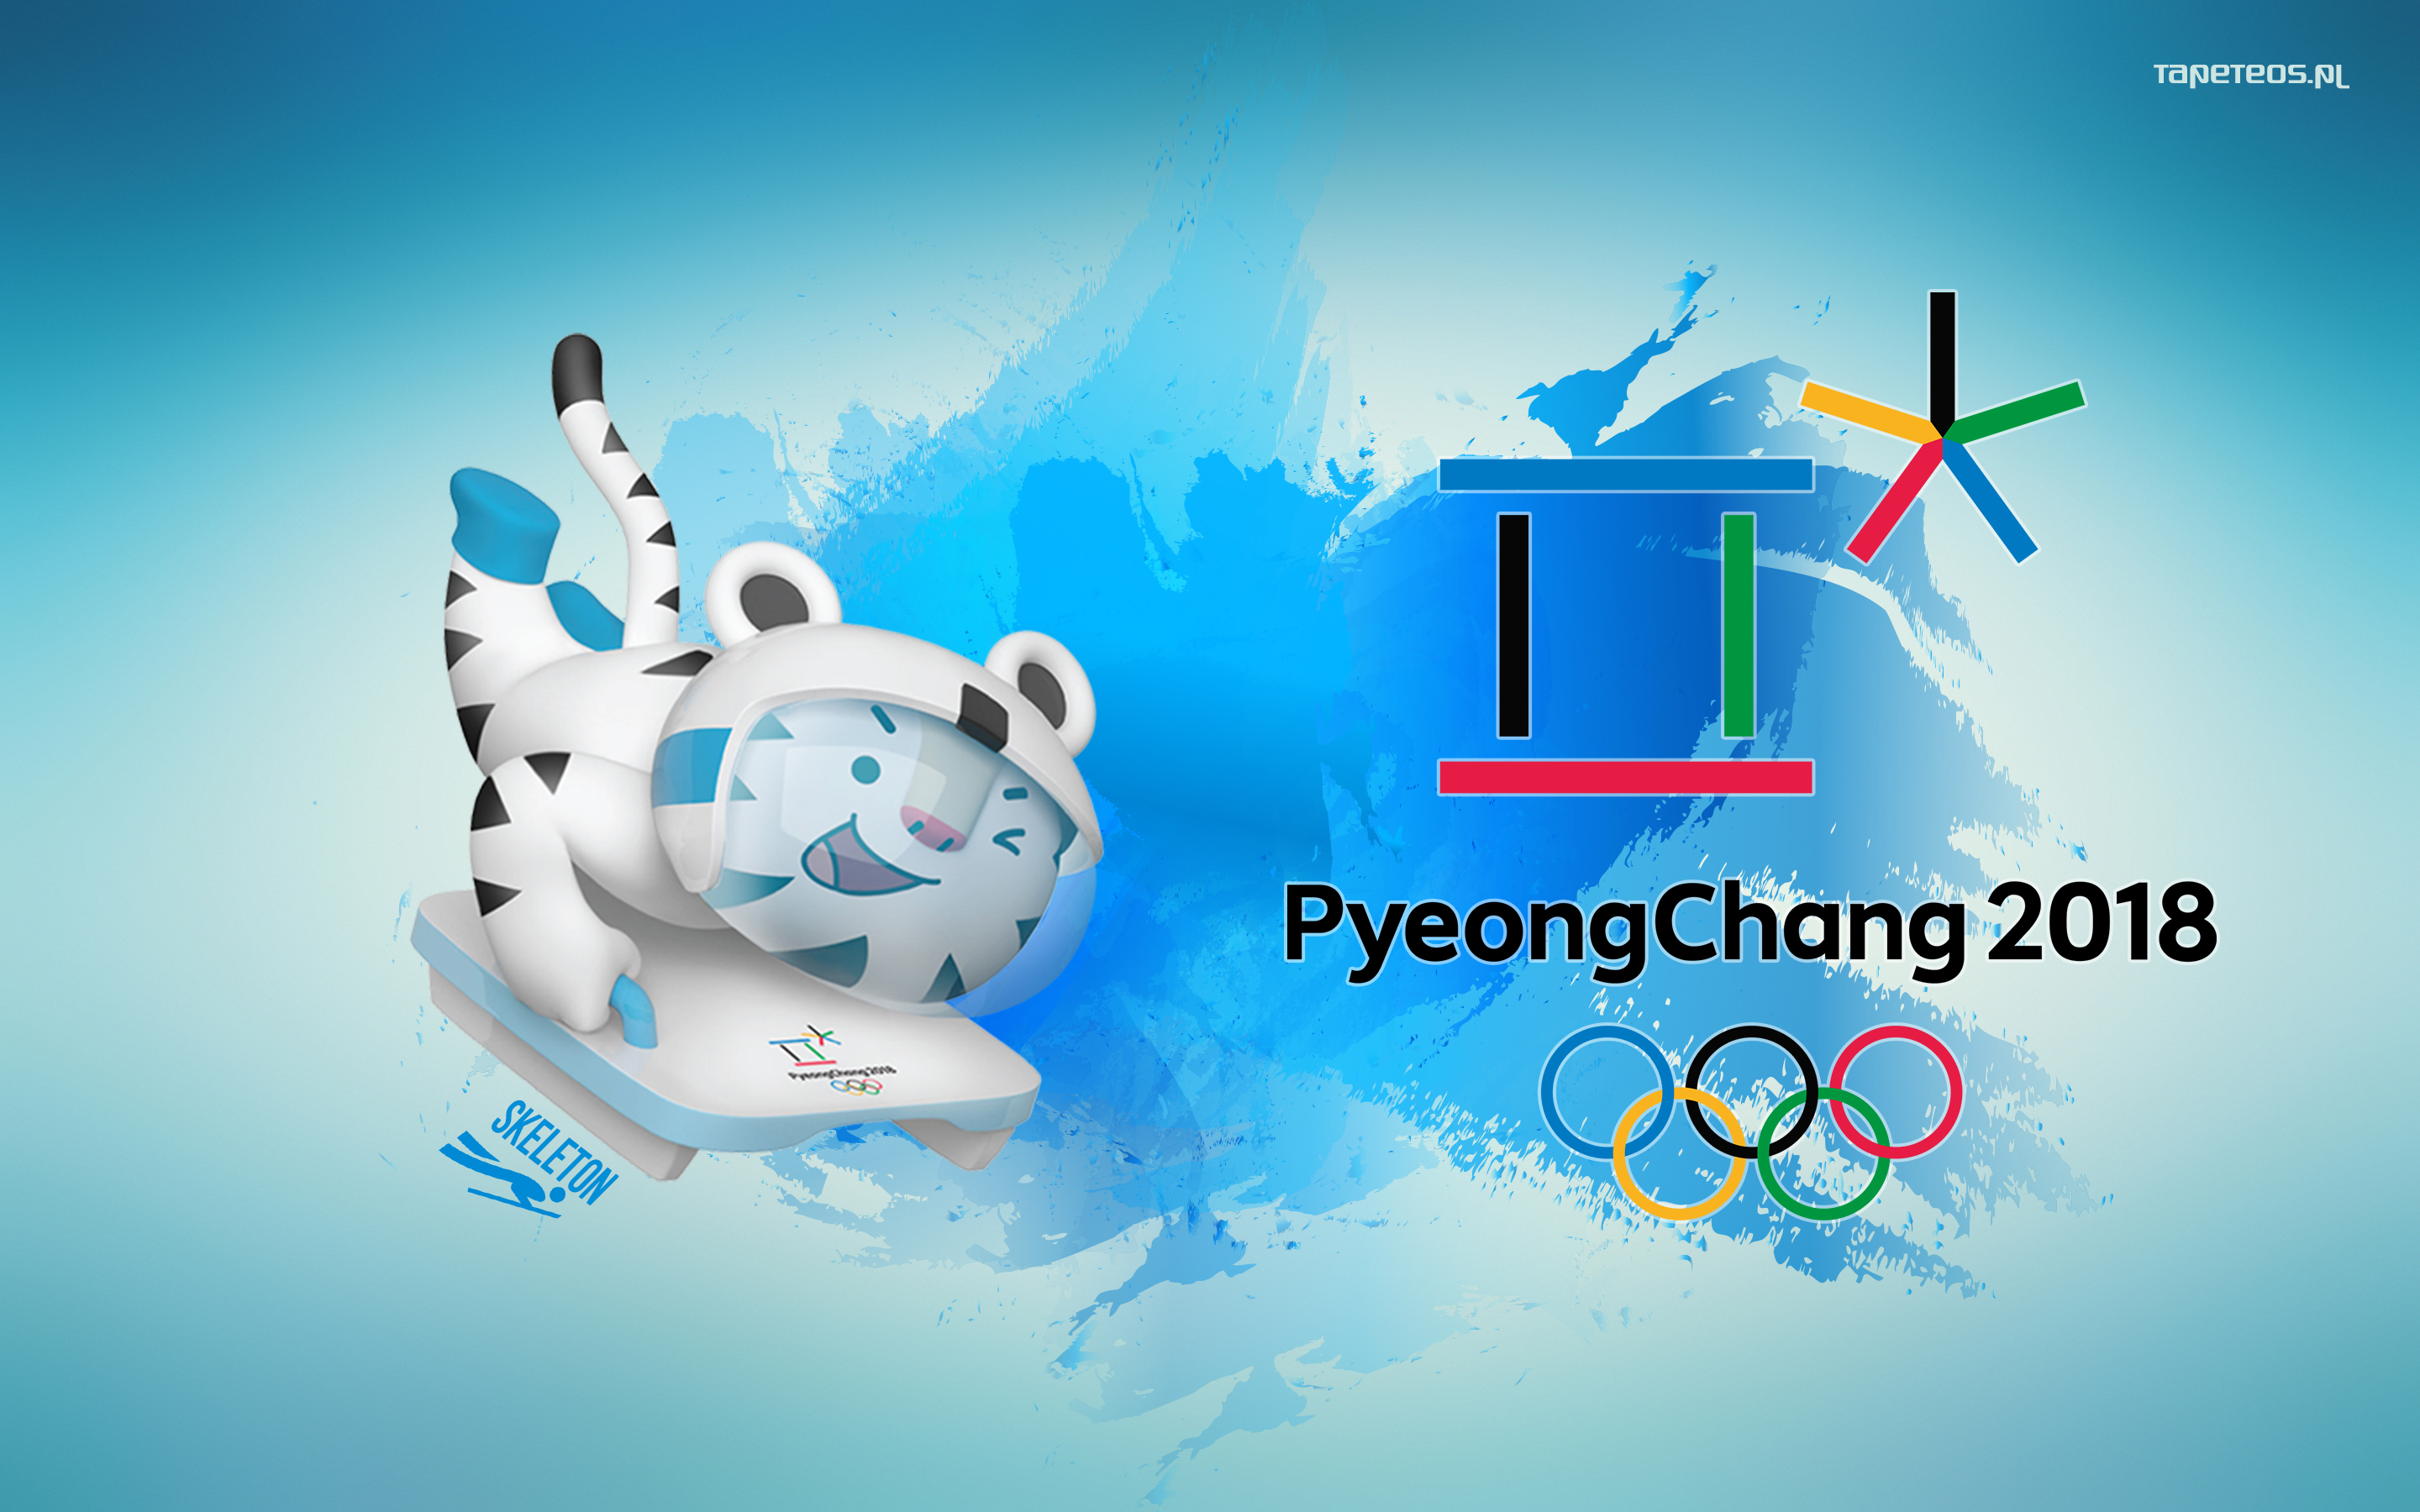 Pjongczang 2018 018 PyeongChang, Skeleton